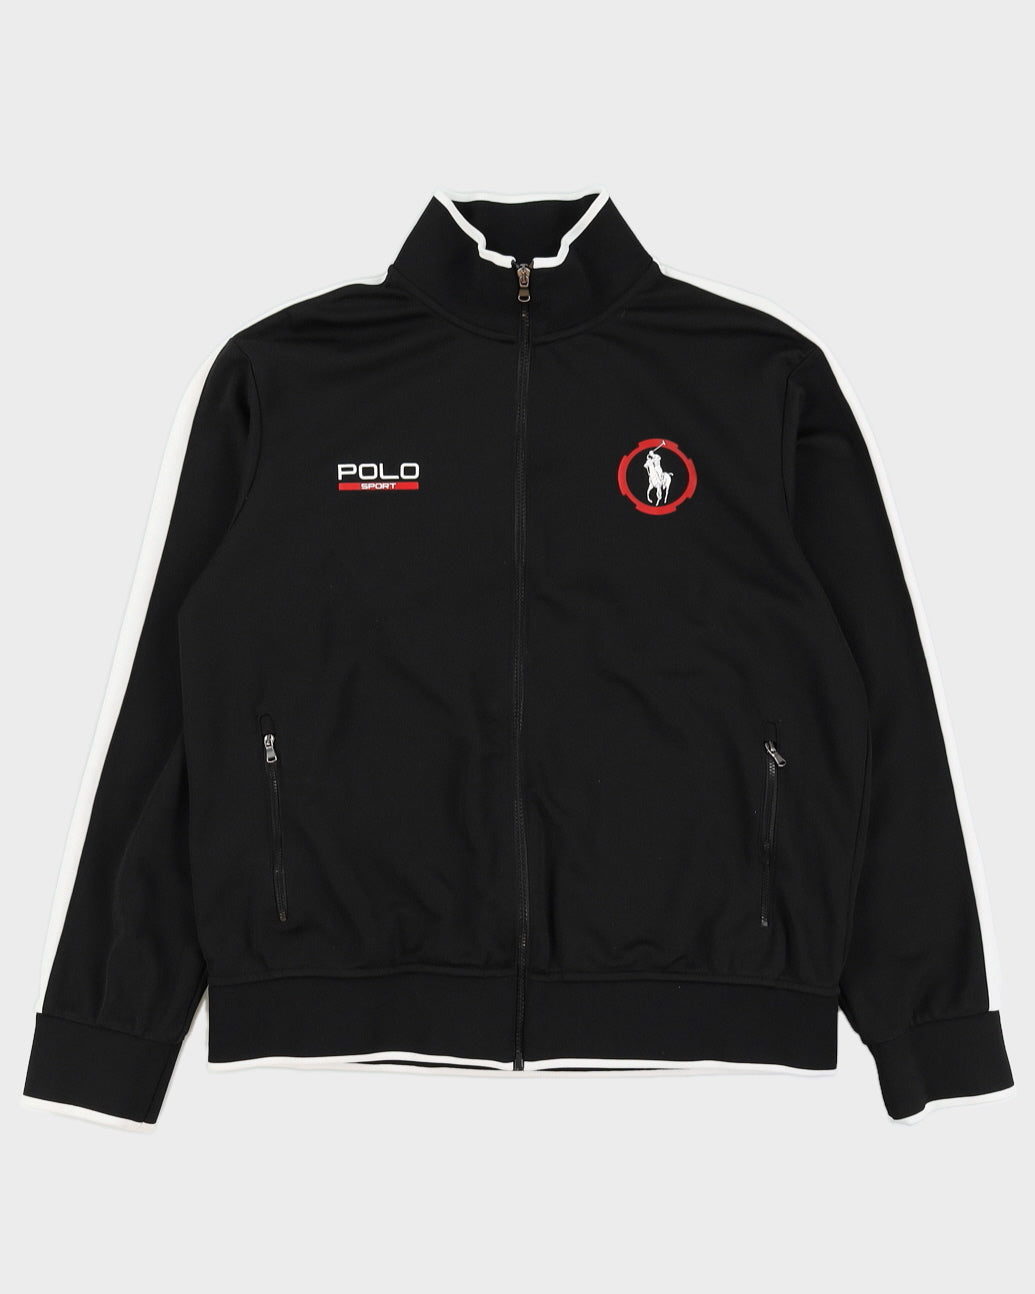 Ralph Lauren Polo Sport Black Track Jacket - L